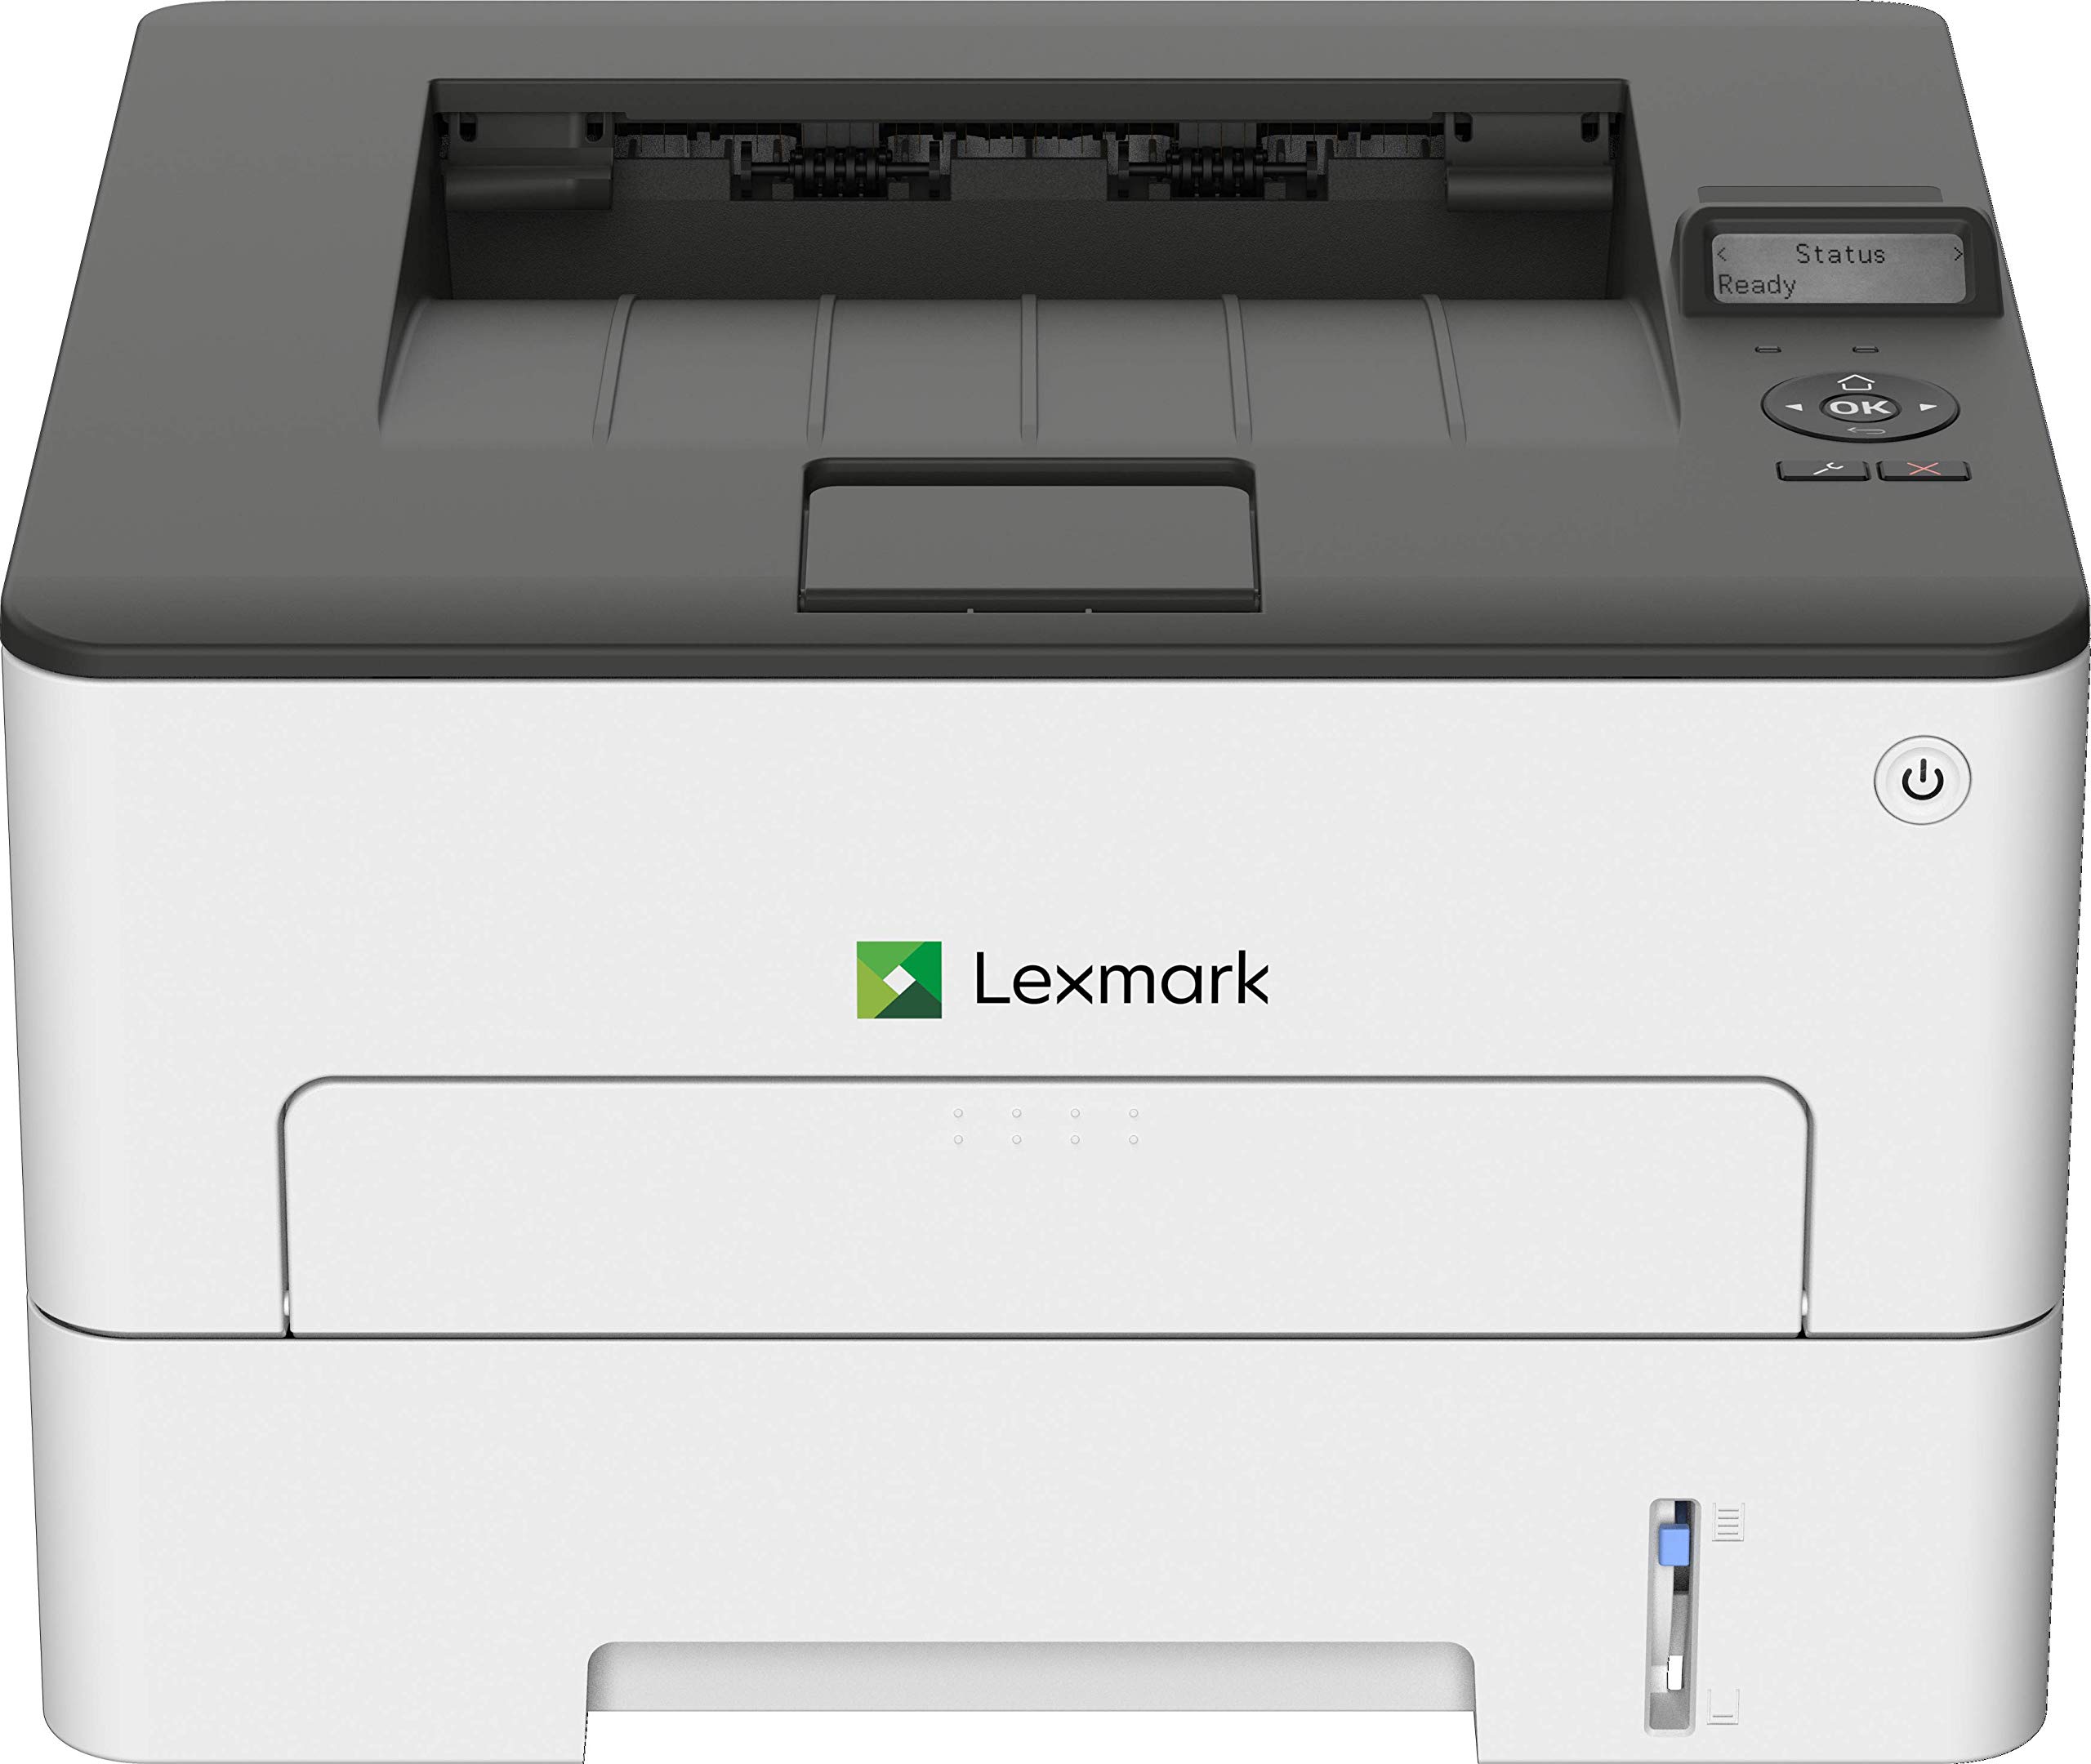 Lexmark B2236dw モノクロ コンパクト レーザー プリンタ、両面印刷、ワイヤレス ネットワーク機能 (18M0100)、ホワイト/グレー、小型